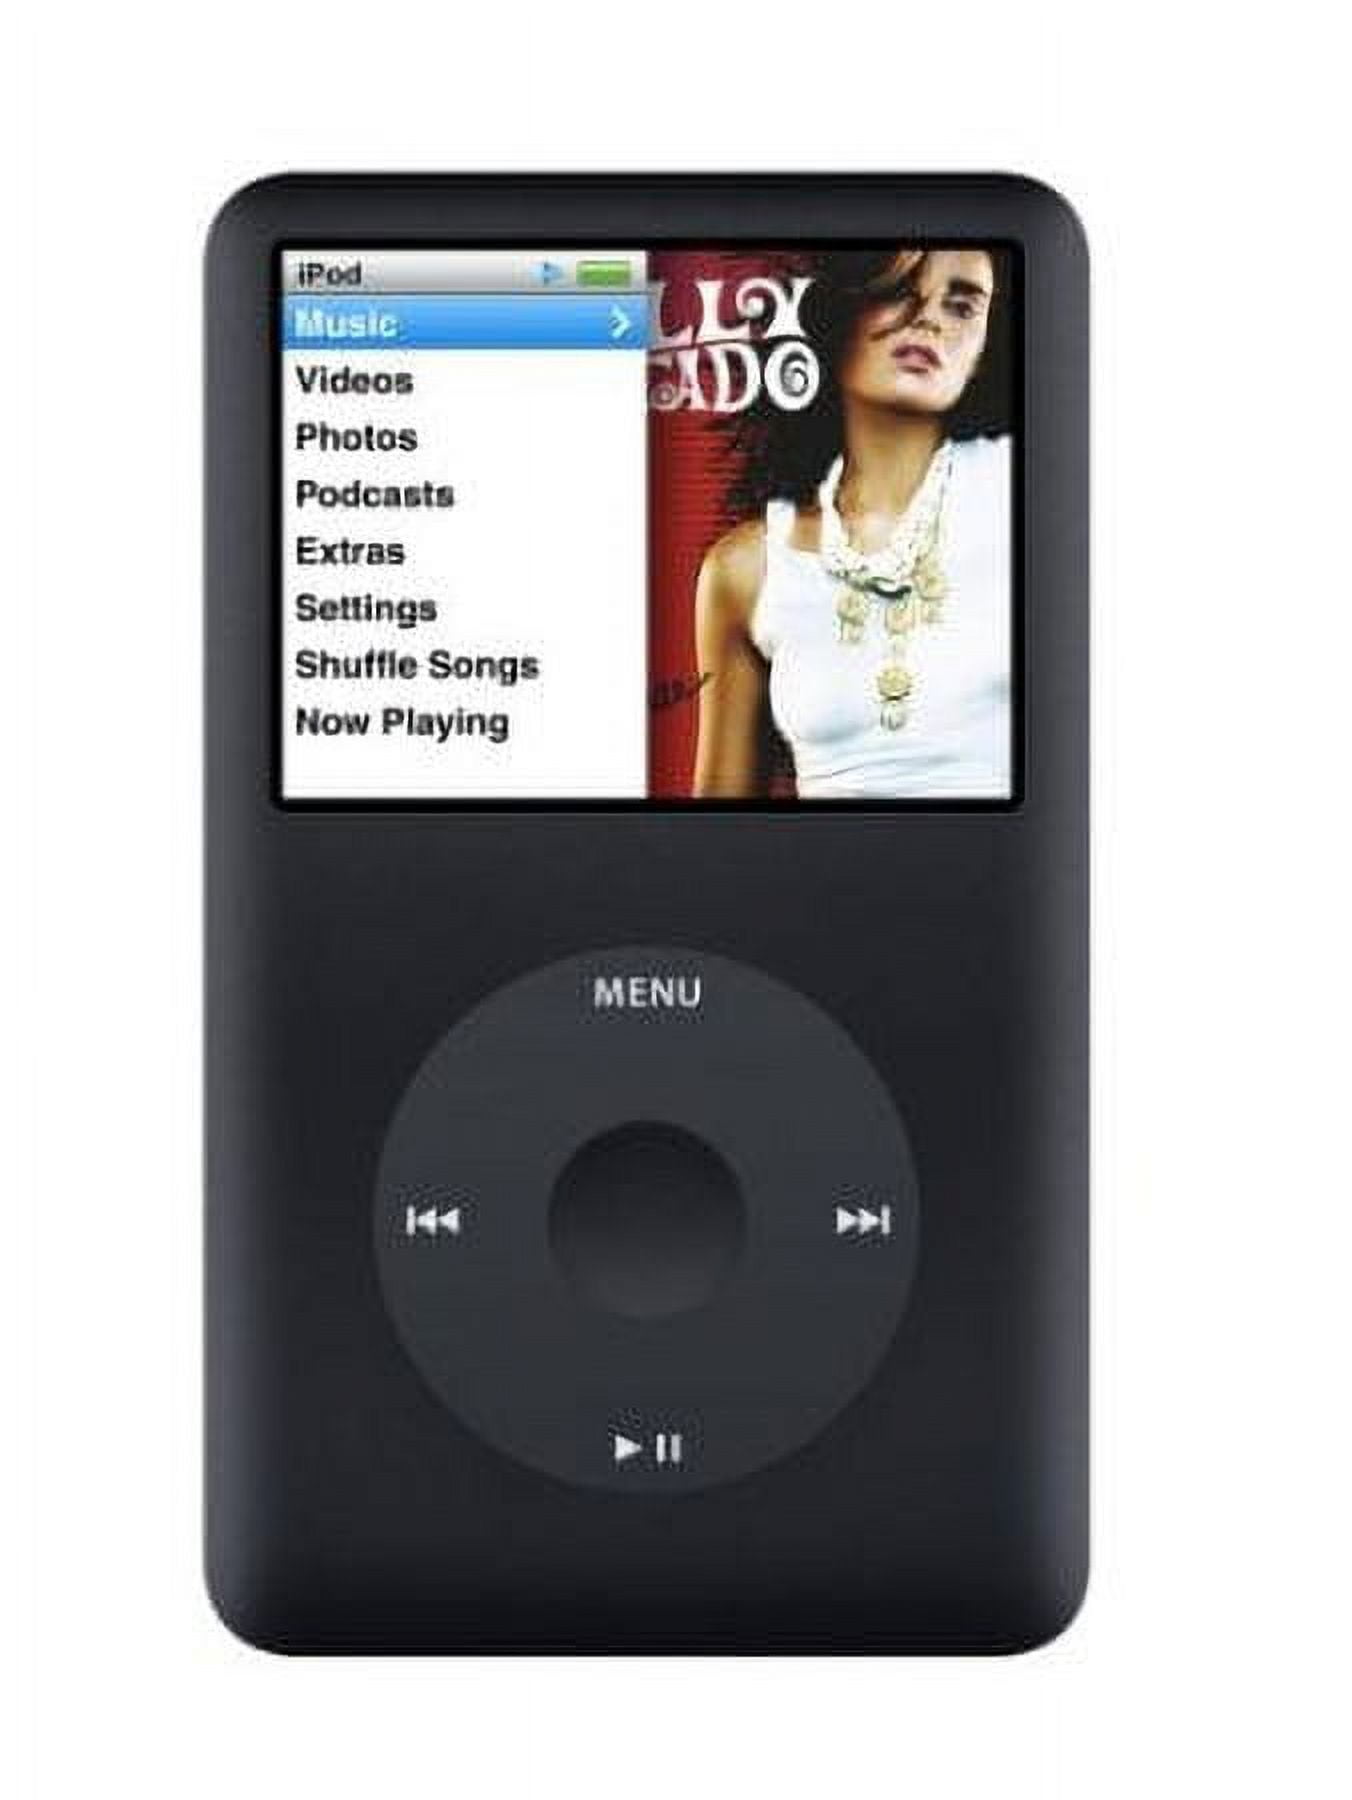 6th Gen iPod Classic 80GB Black, MP3 Audio/Video Player